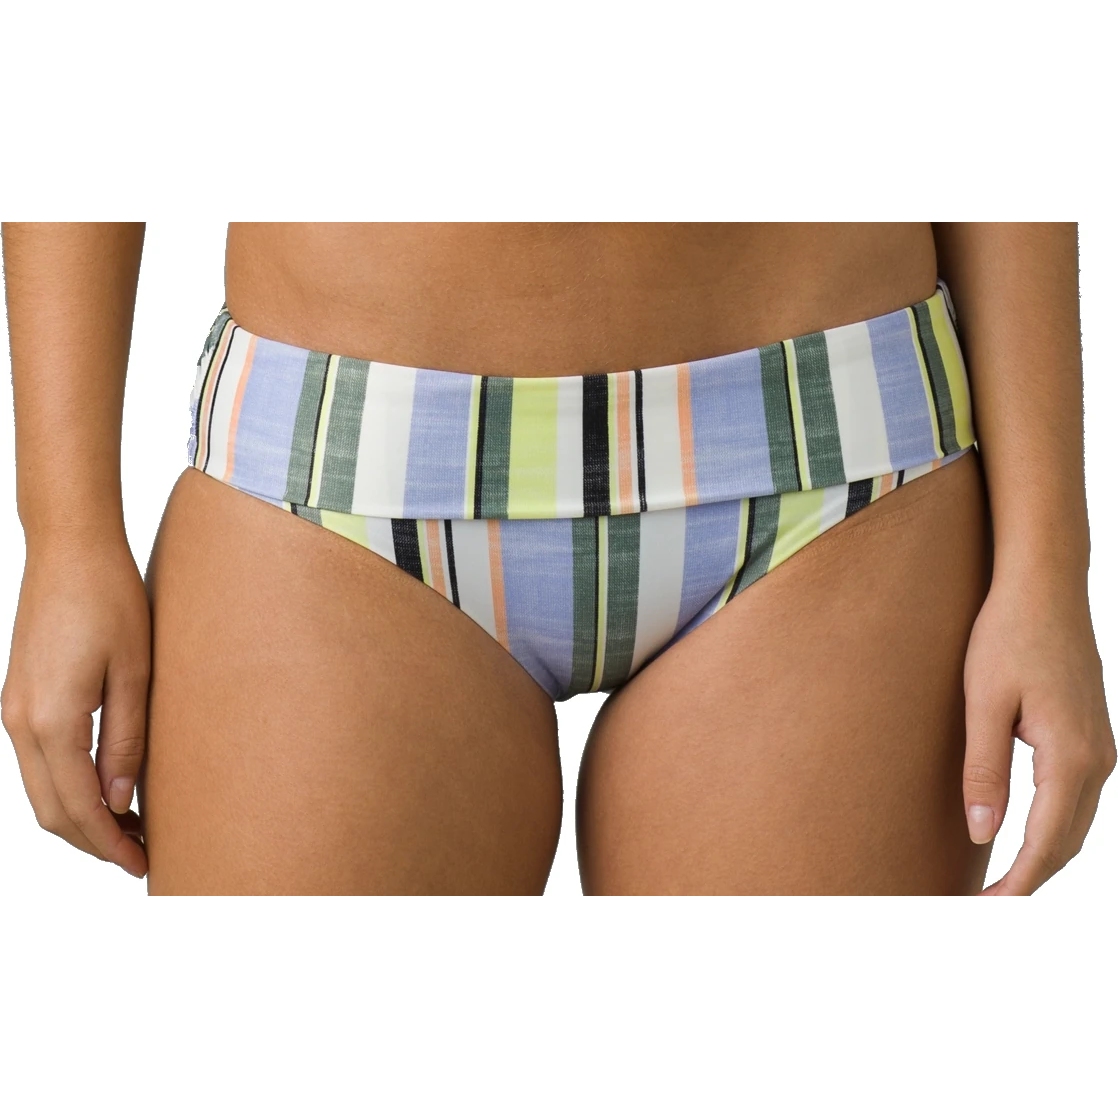 Productfoto van prAna Marta Bikini Bottom Women - Morning Glory Stripe